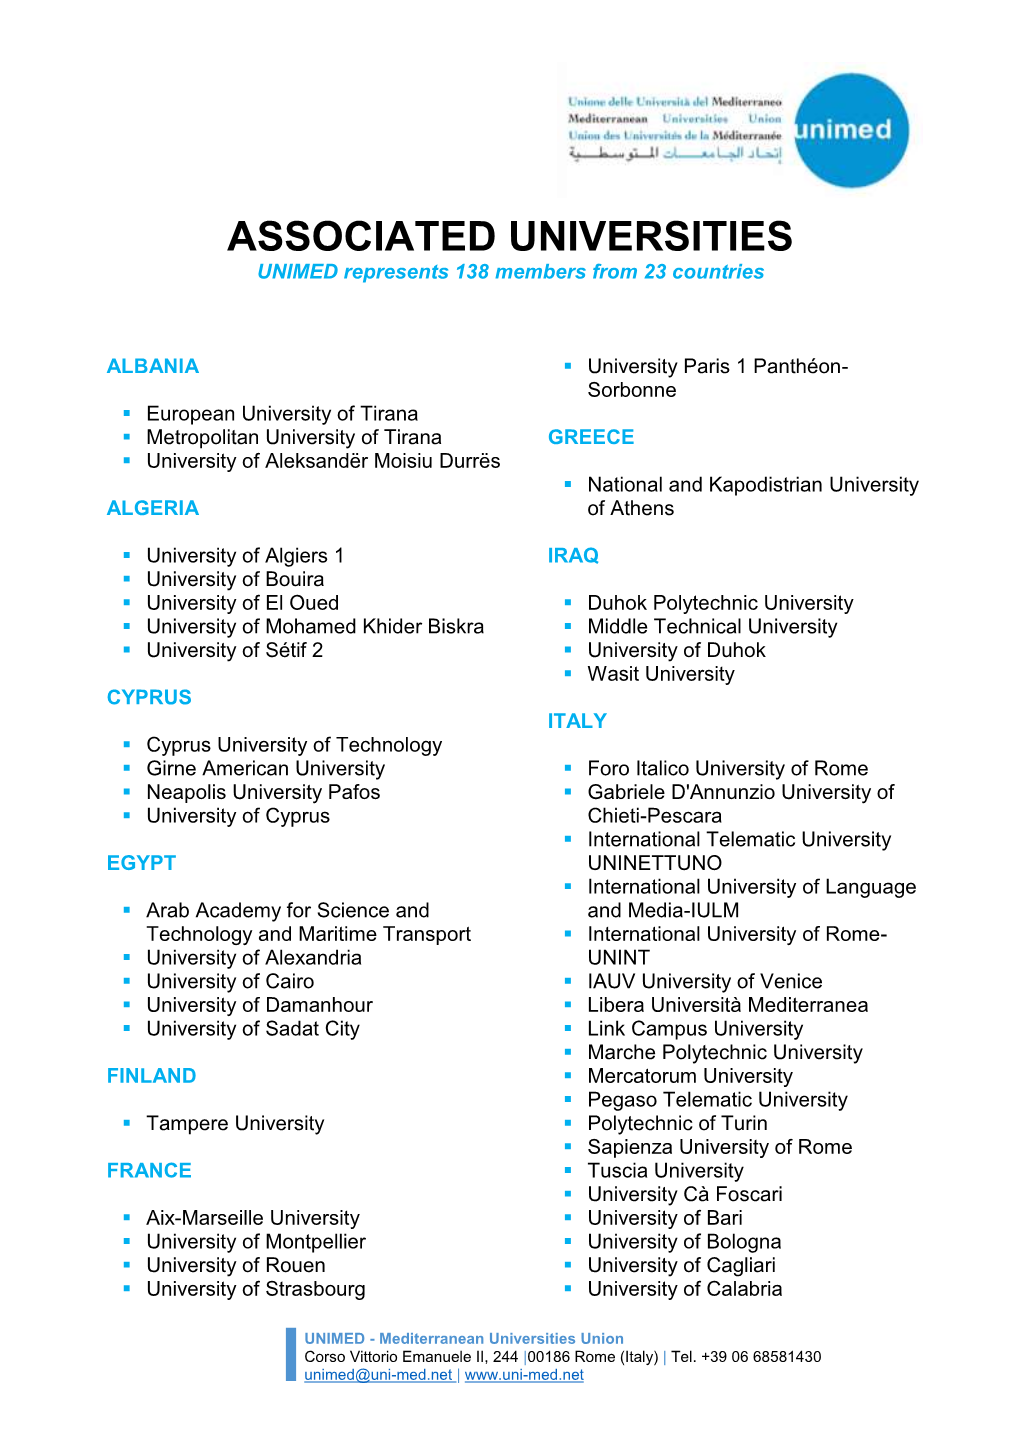 UNIMED Member Universities